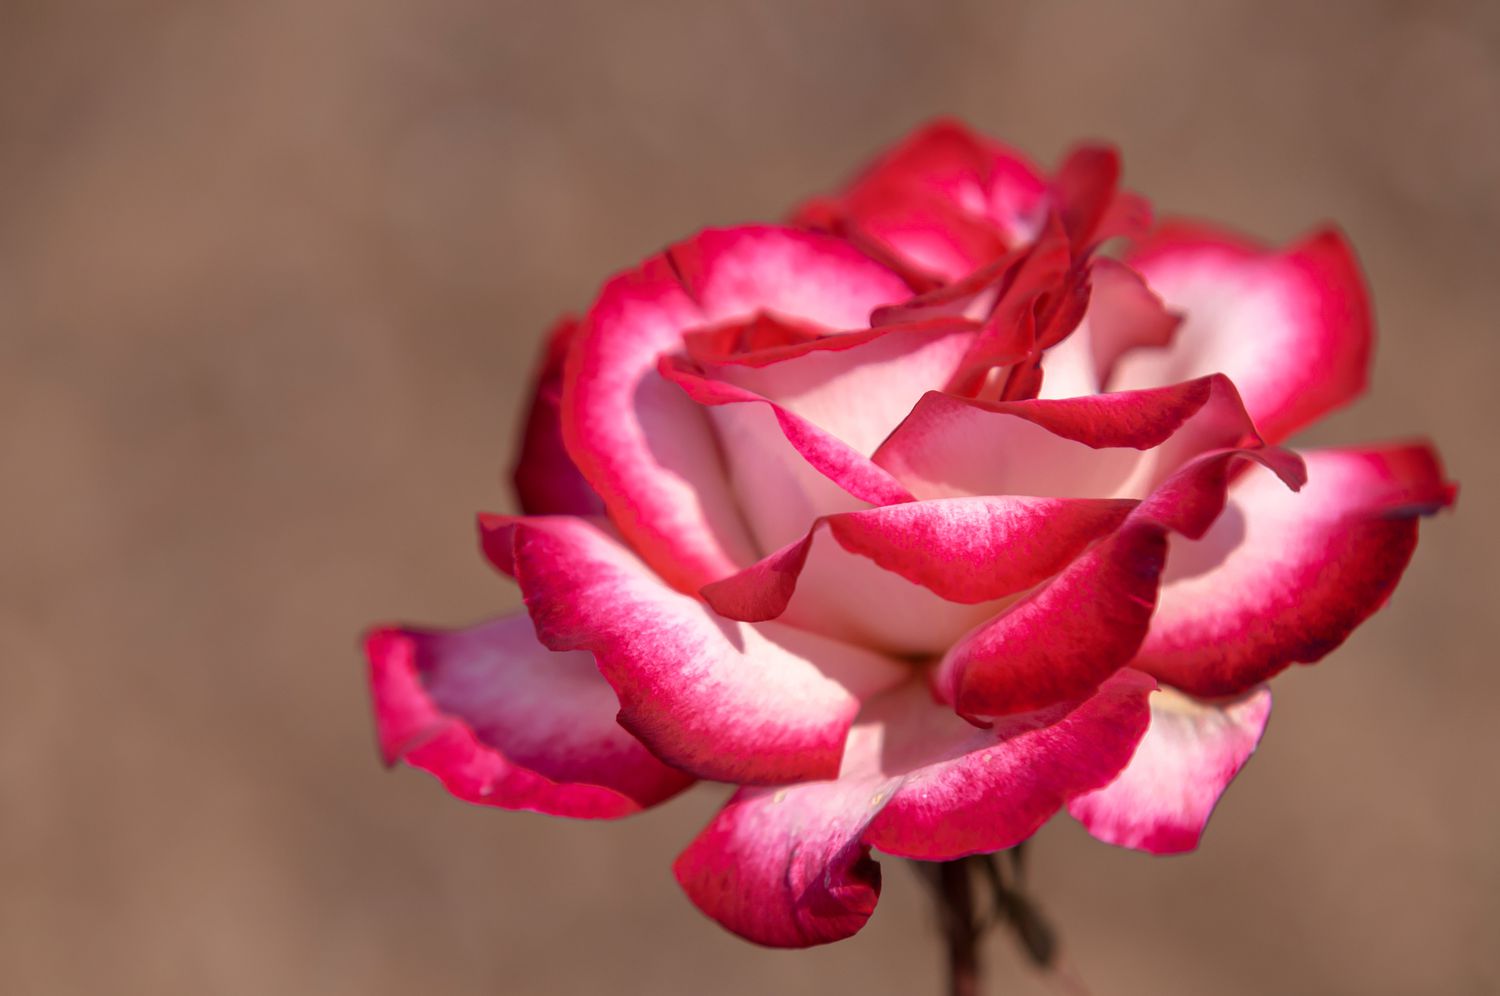 Gros plan rose bicolore rose et blanc